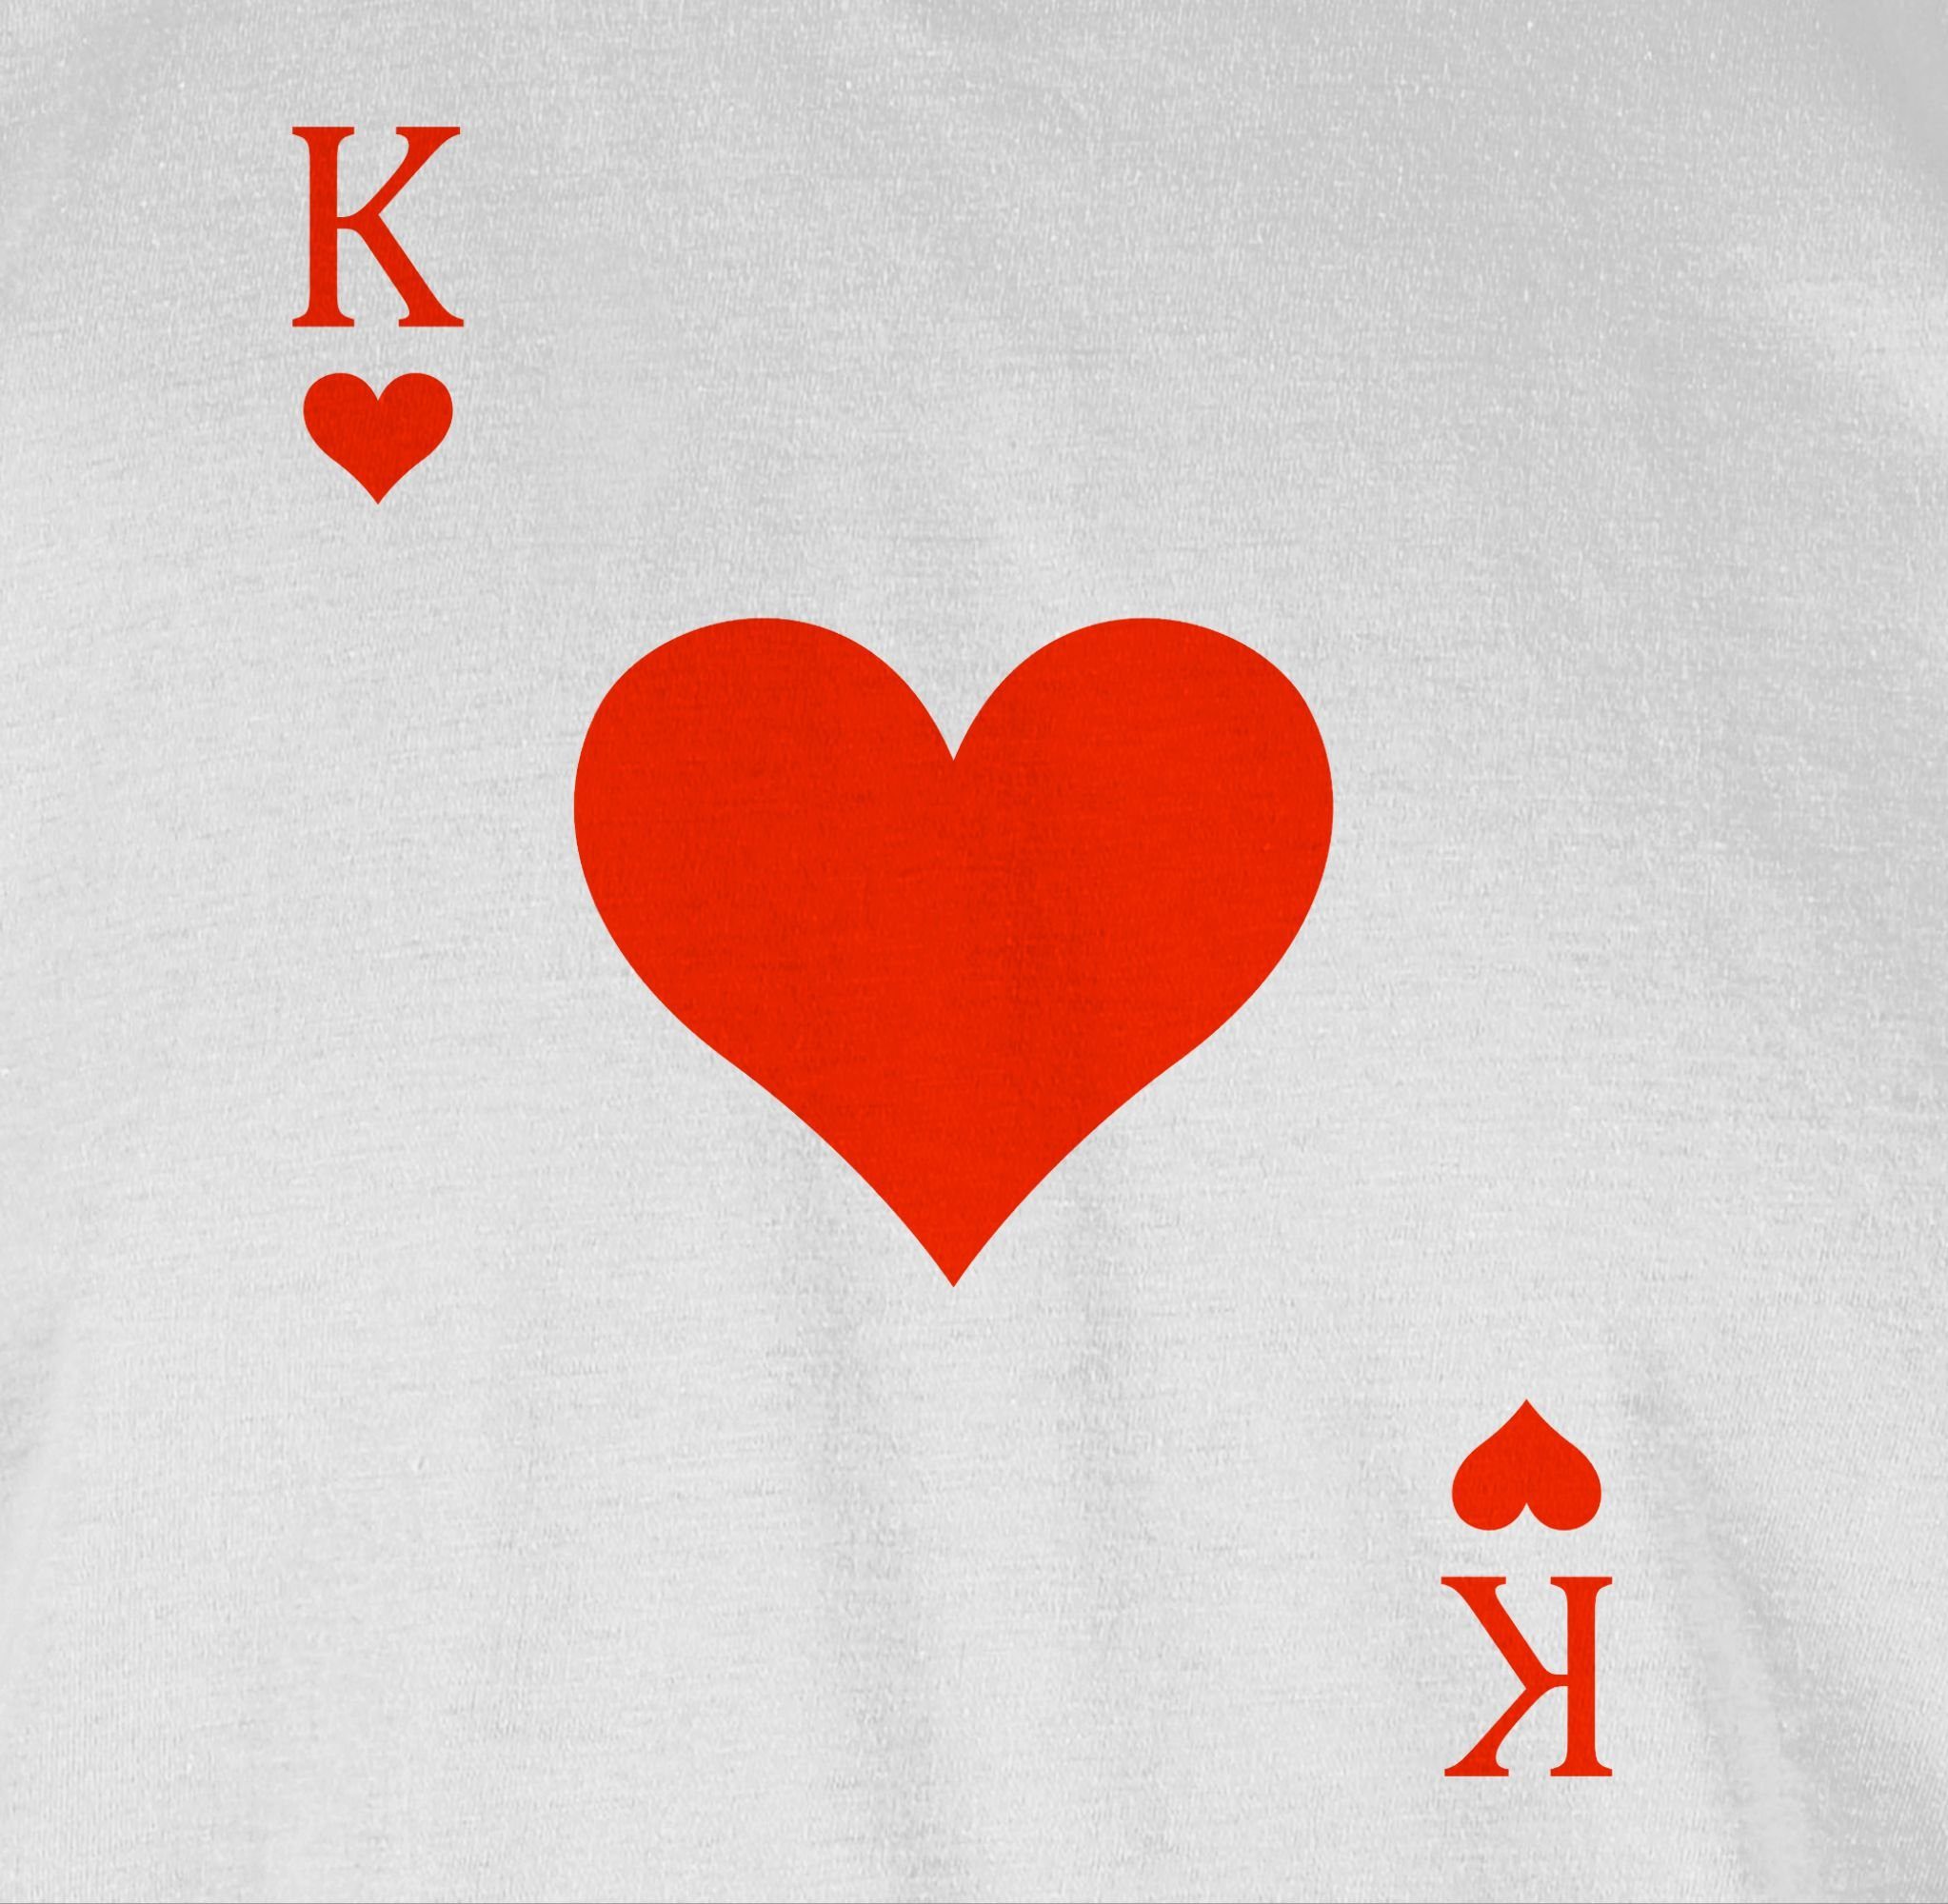 Shirtracer T-Shirt Herz He Karneval Kartenspiel & - Queen Spielkarte - König King Weiß Fasching Herzkönig 2 Karneval